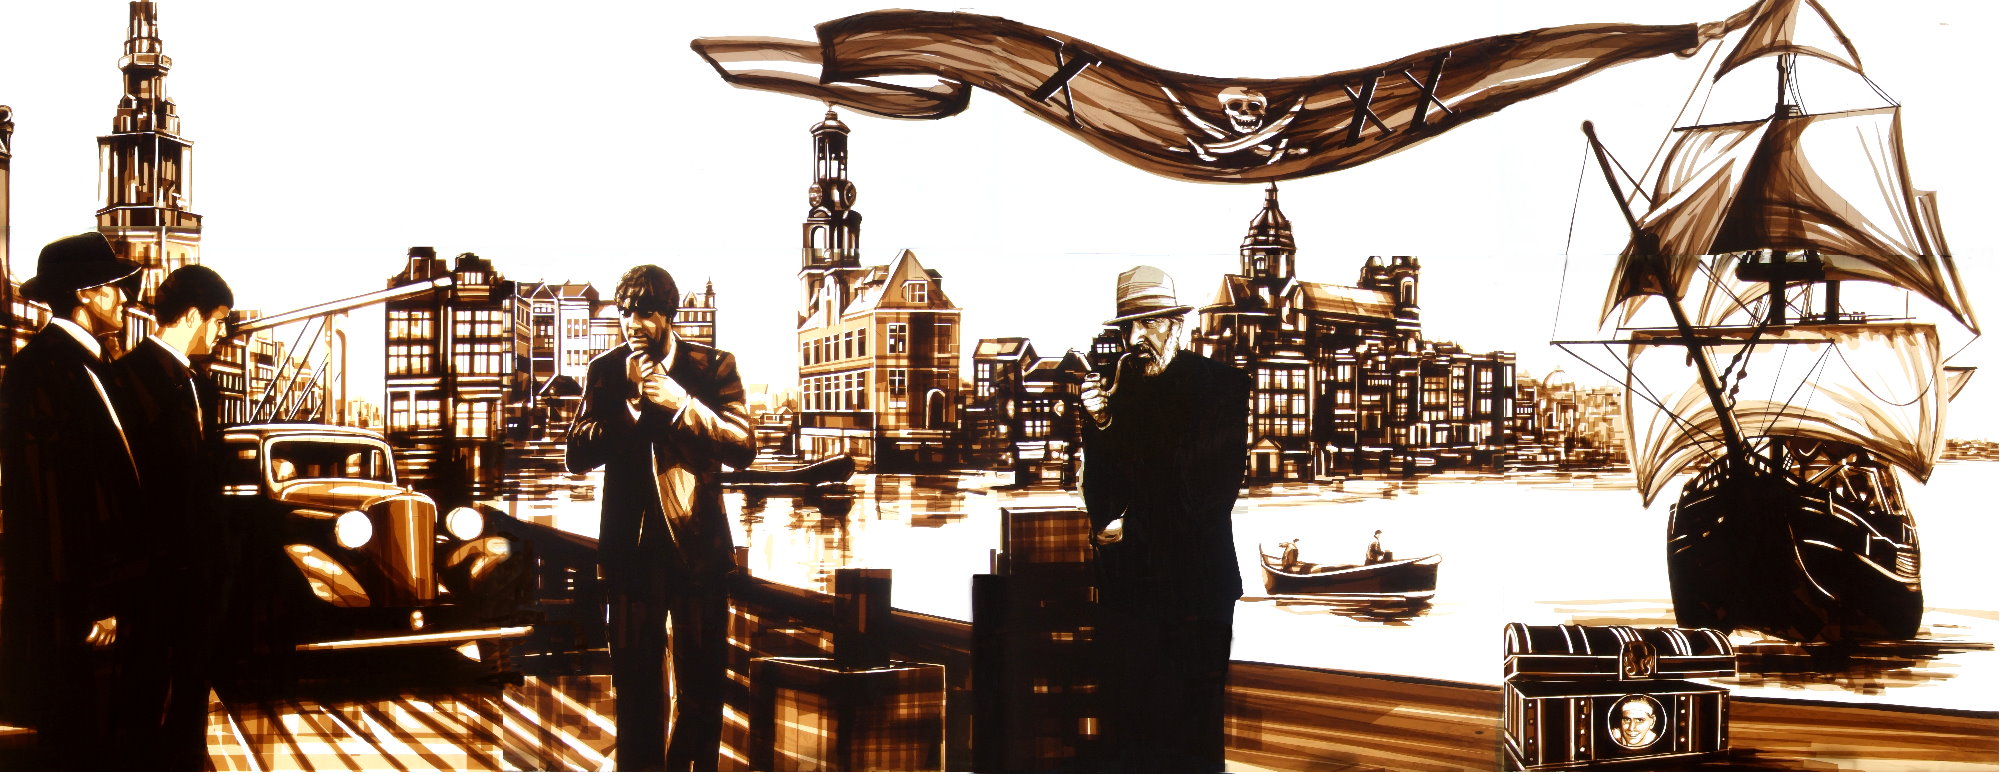 Max zorn, de dampkring, Amsterdam tape art